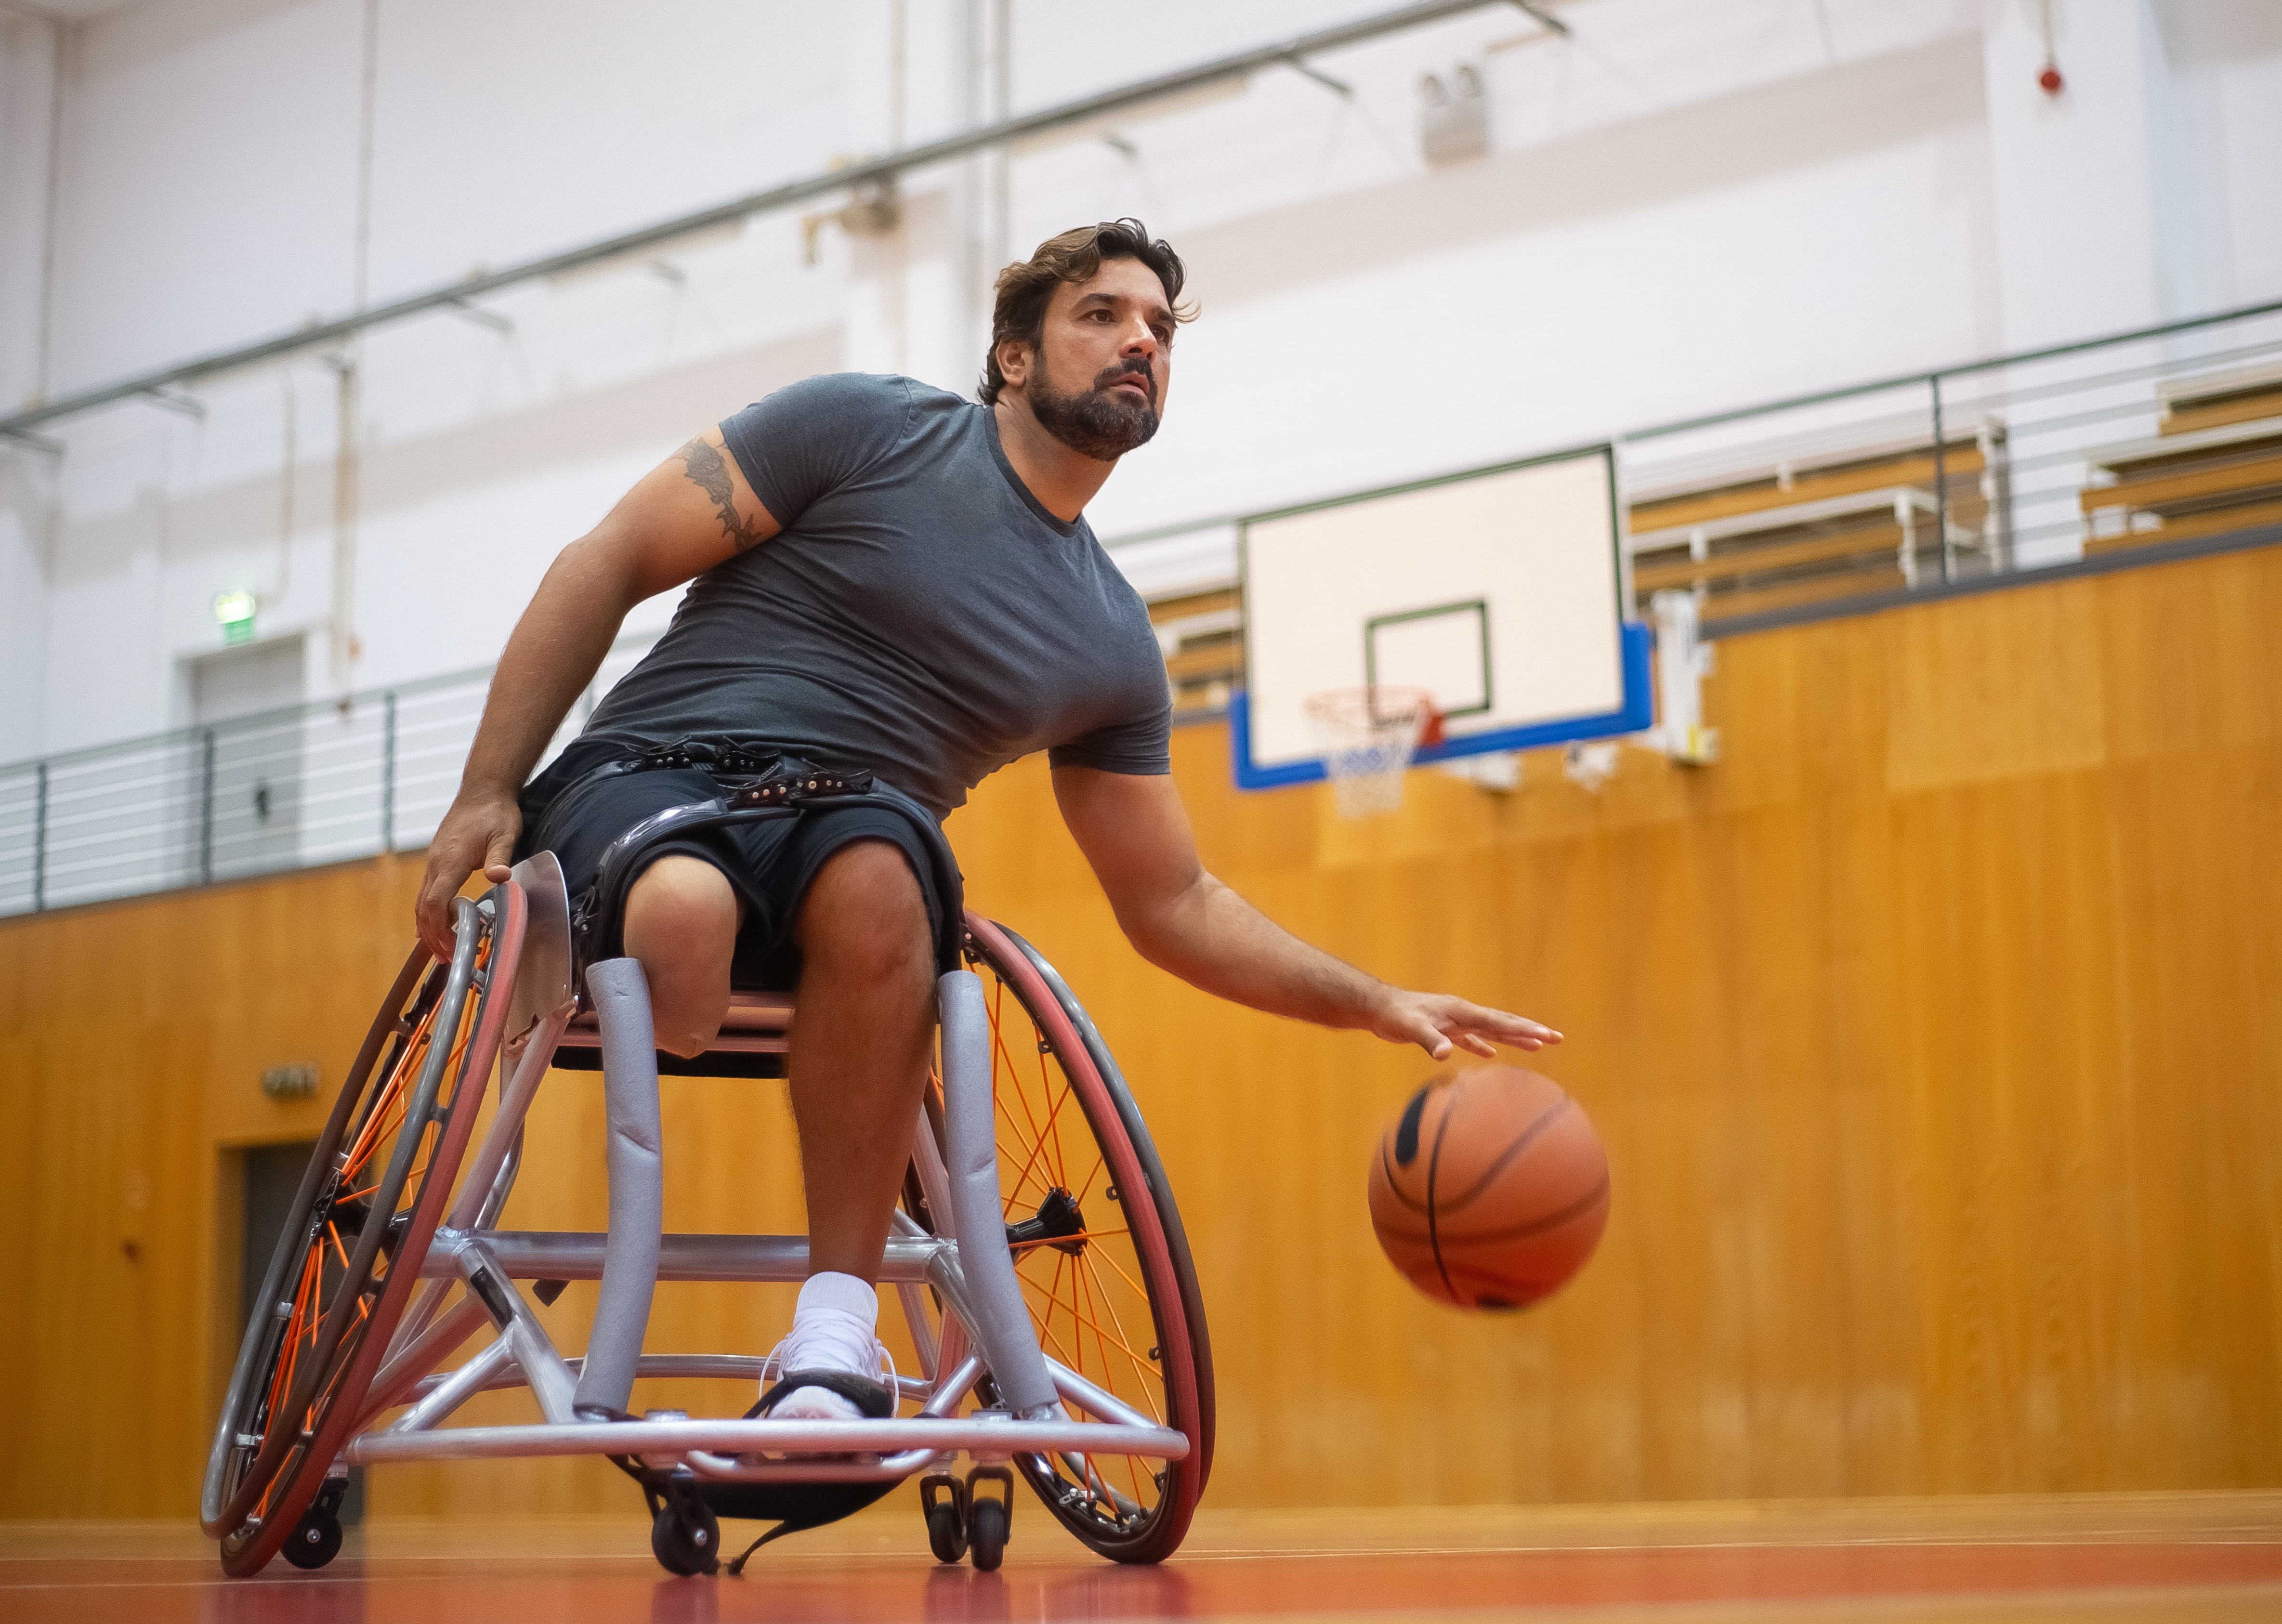 man playnig wheelchair basketball on court